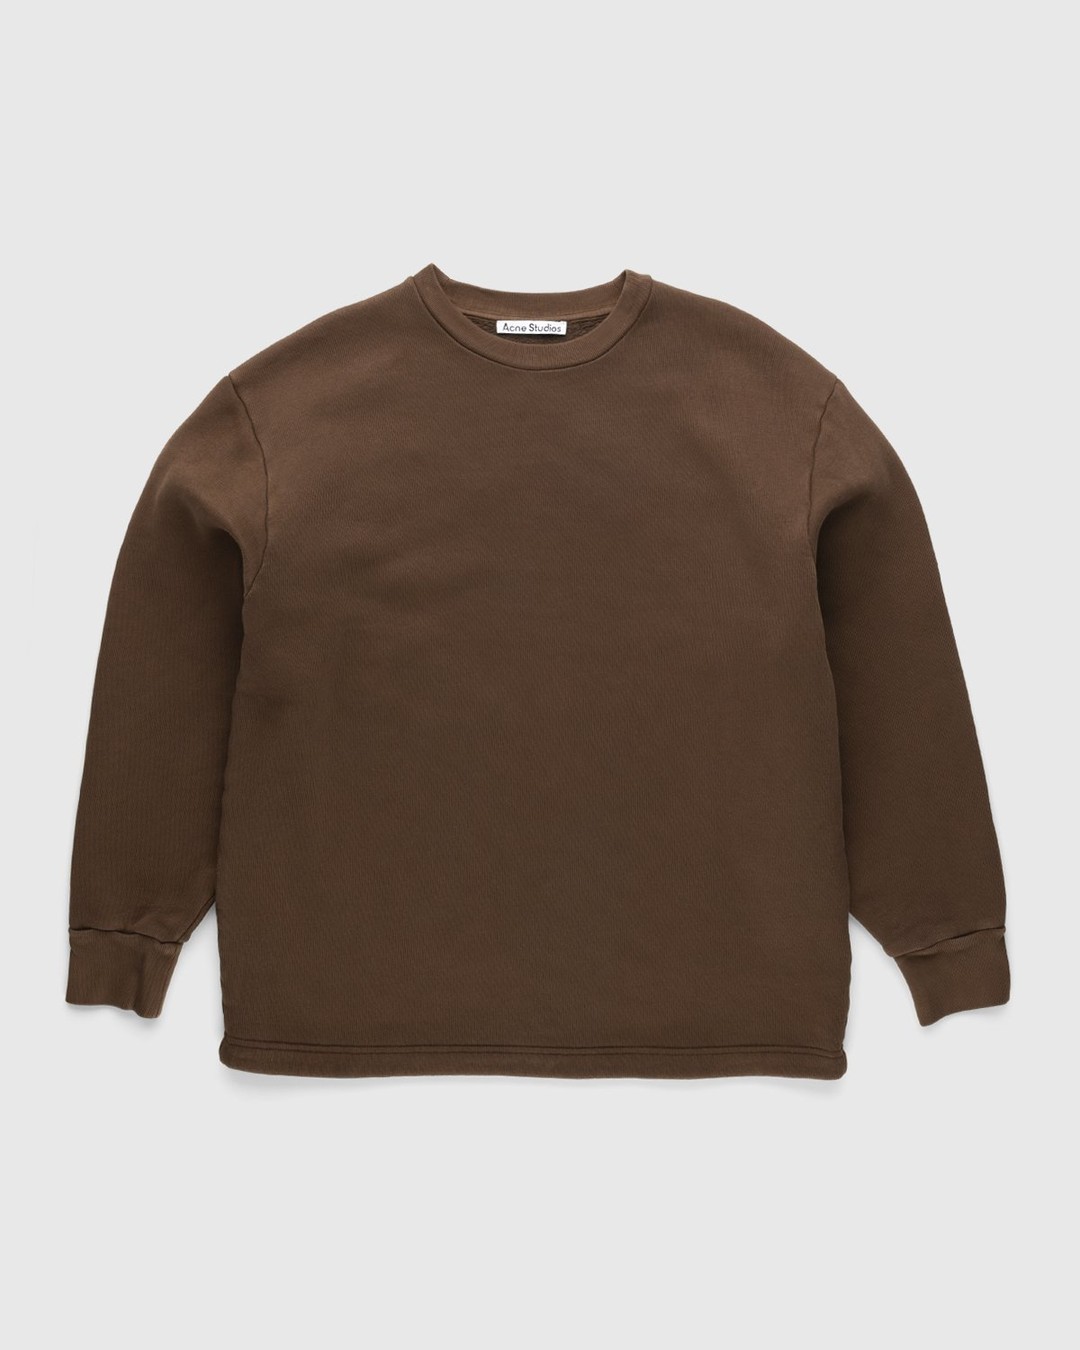 Acne Studios – Logo Sweatshirt Chocolate Brown - Sweatshirts - Brown - Image 2